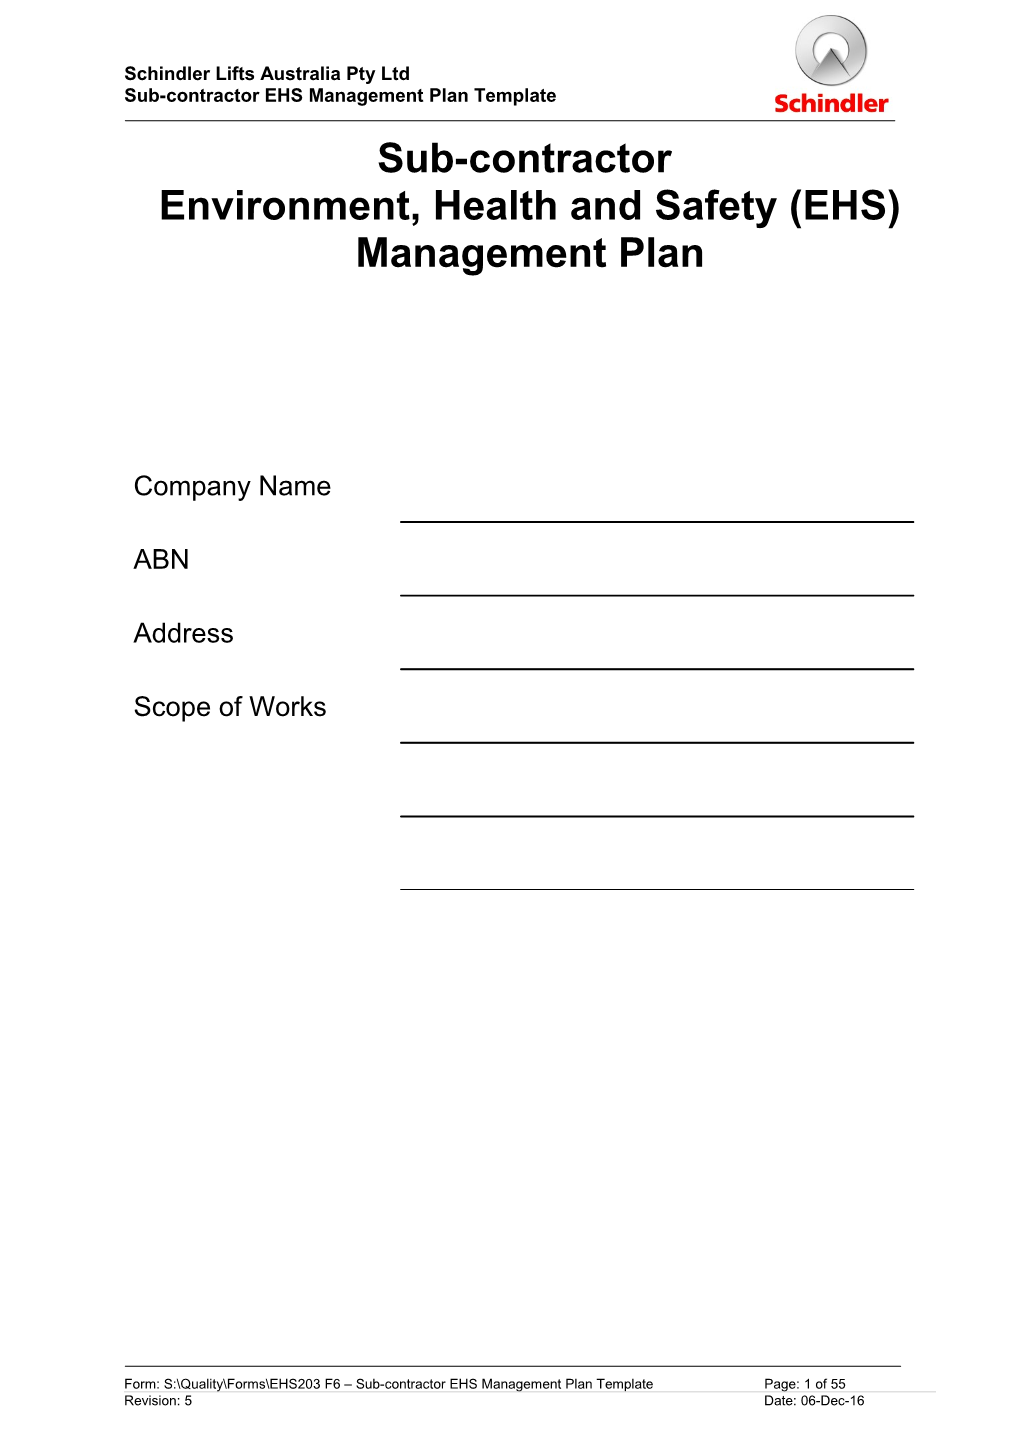 Sub-Contractor EHS Management Plan Template